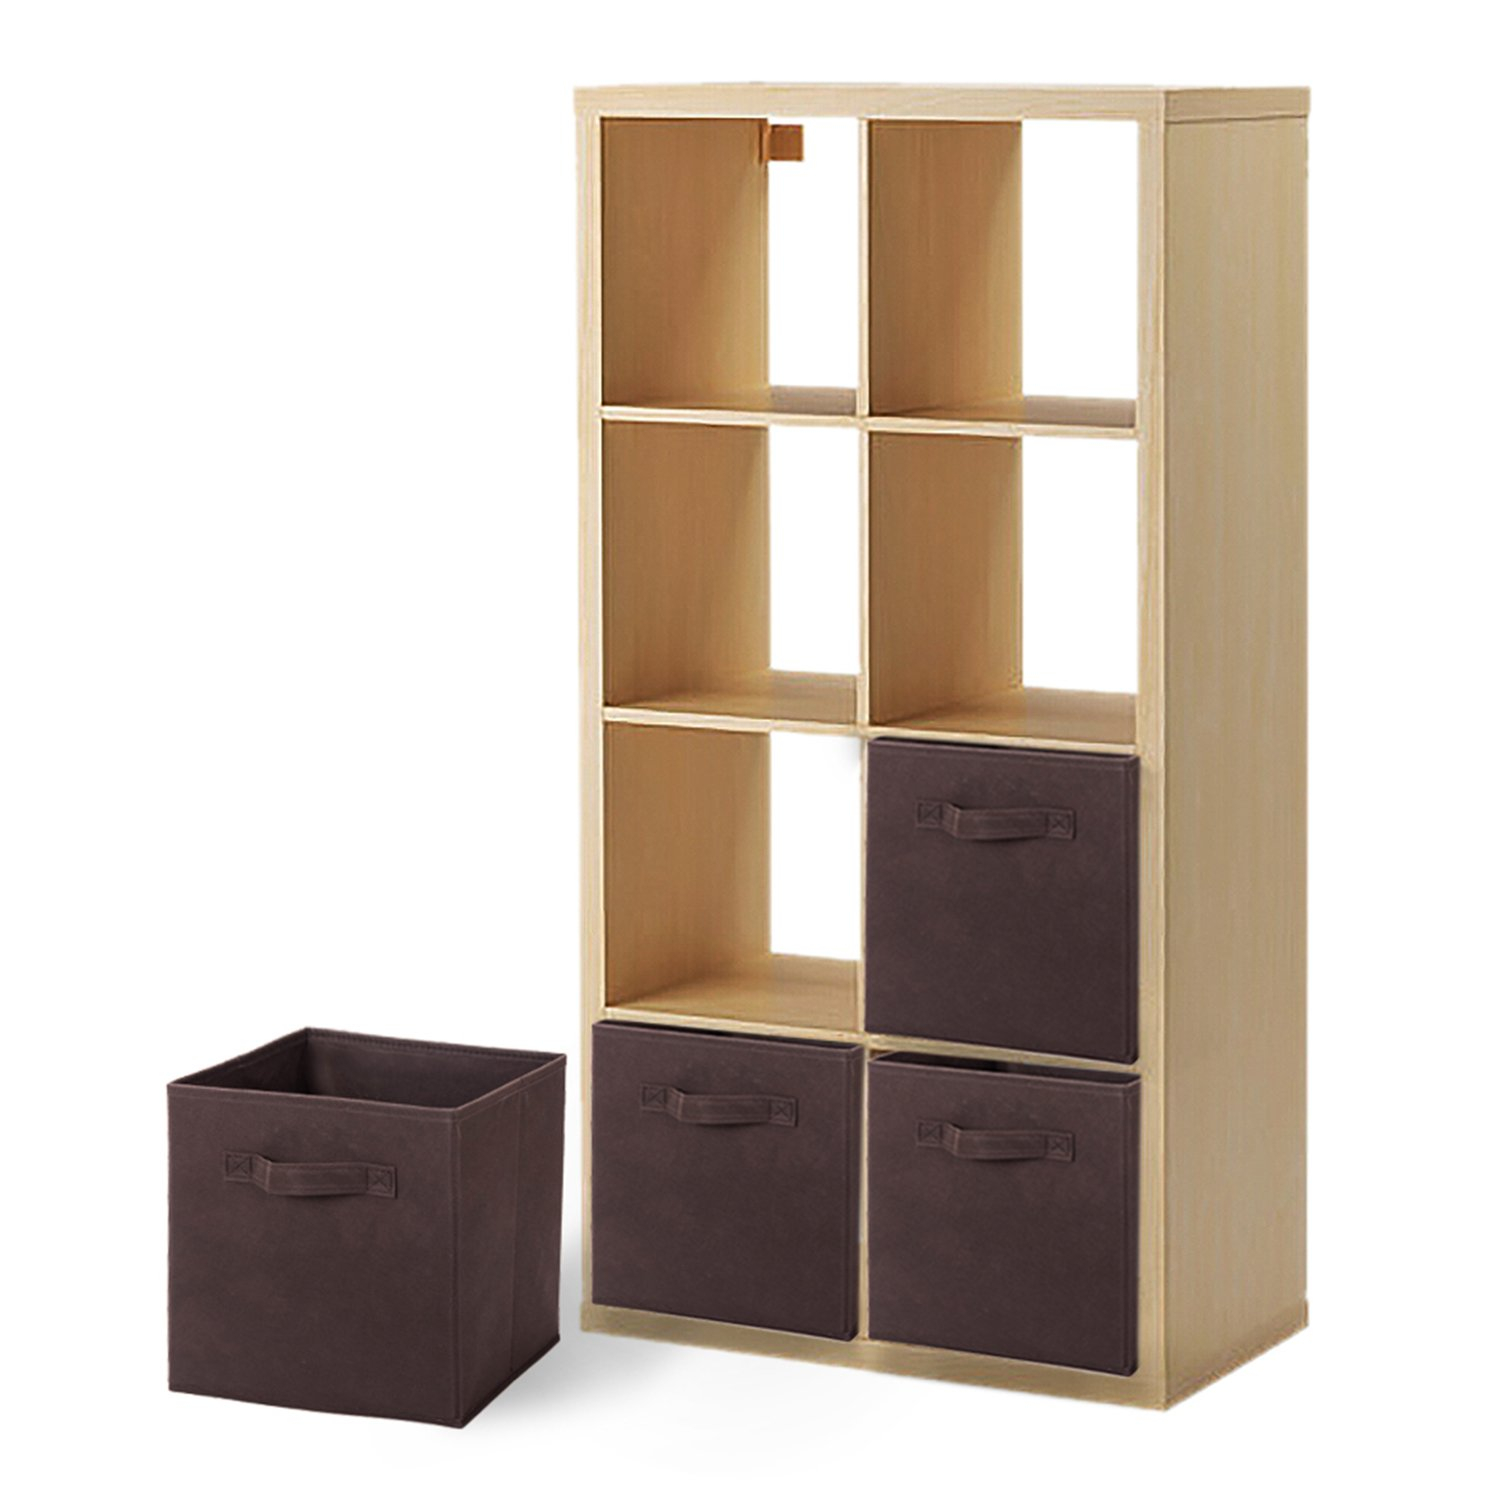 Storage Cubes With Bins • Cabinet Ideas